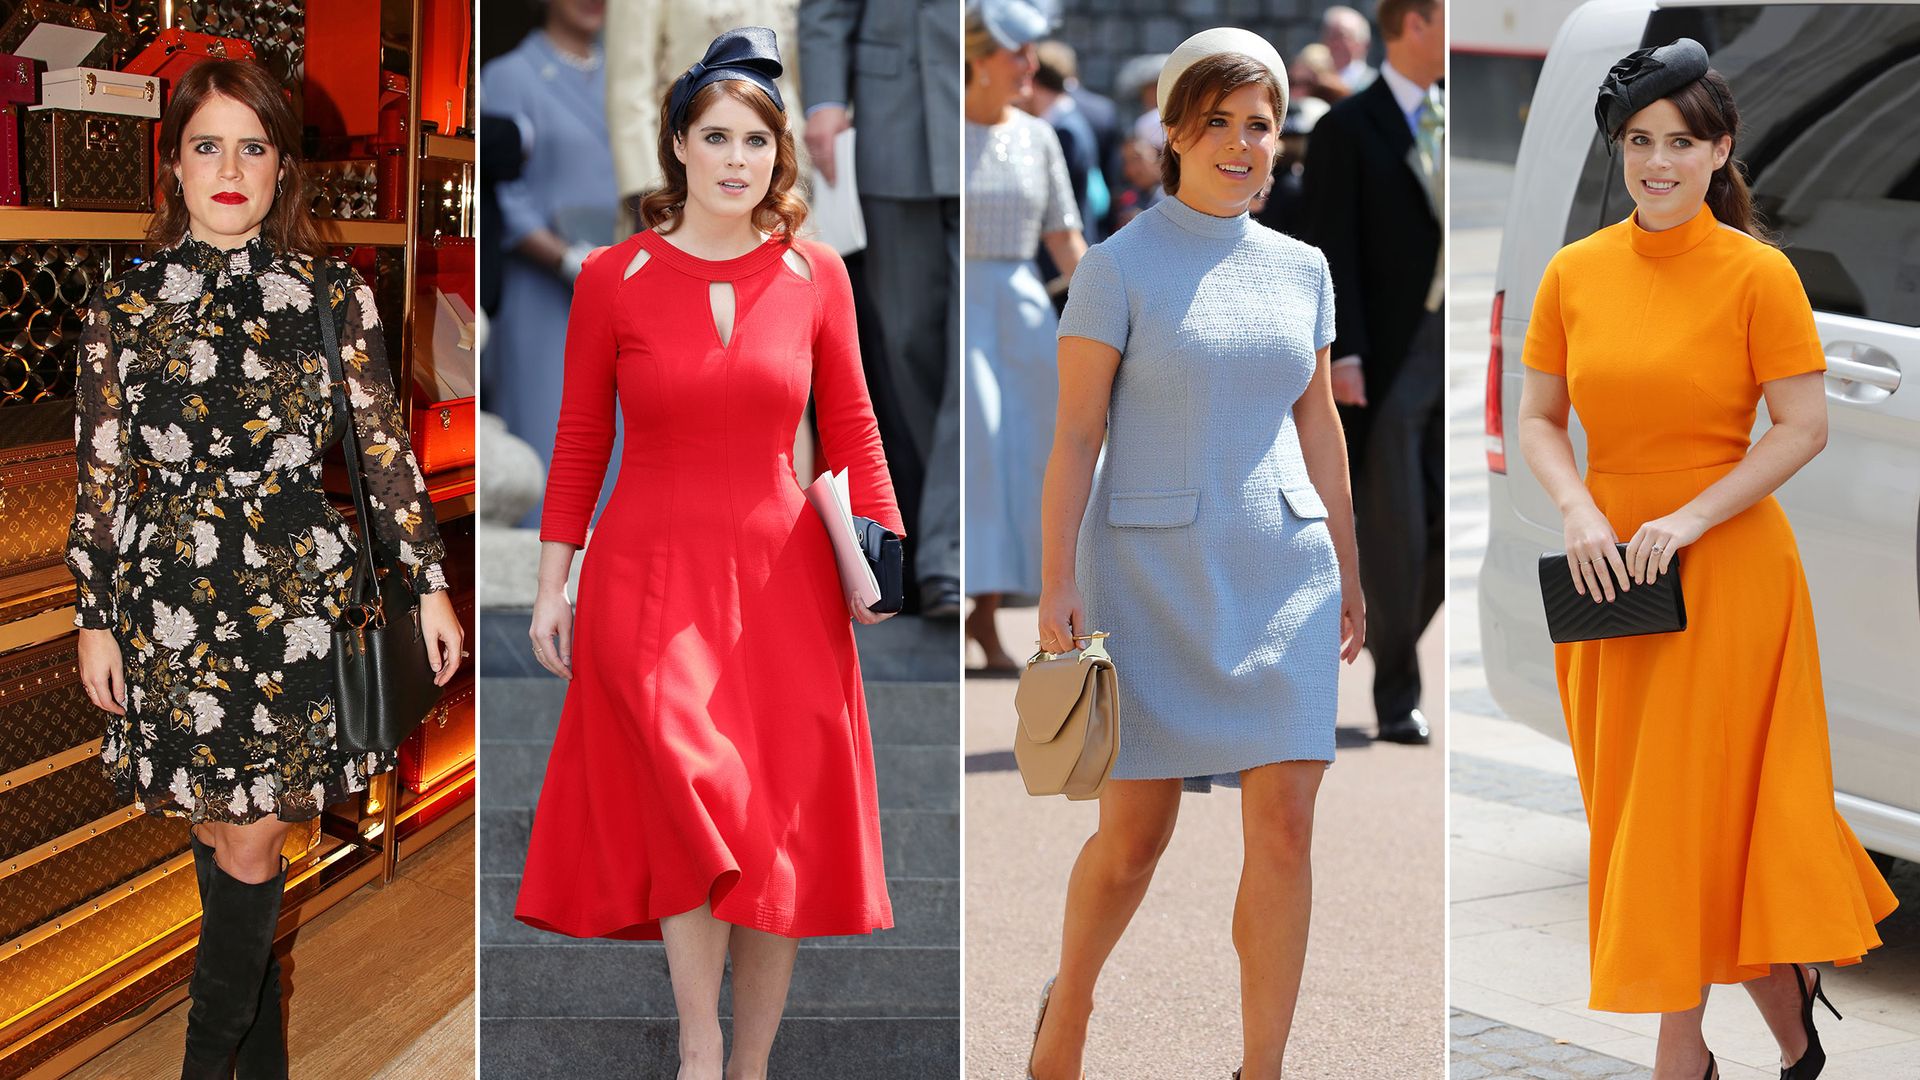 Princess Eugenie's style evolution